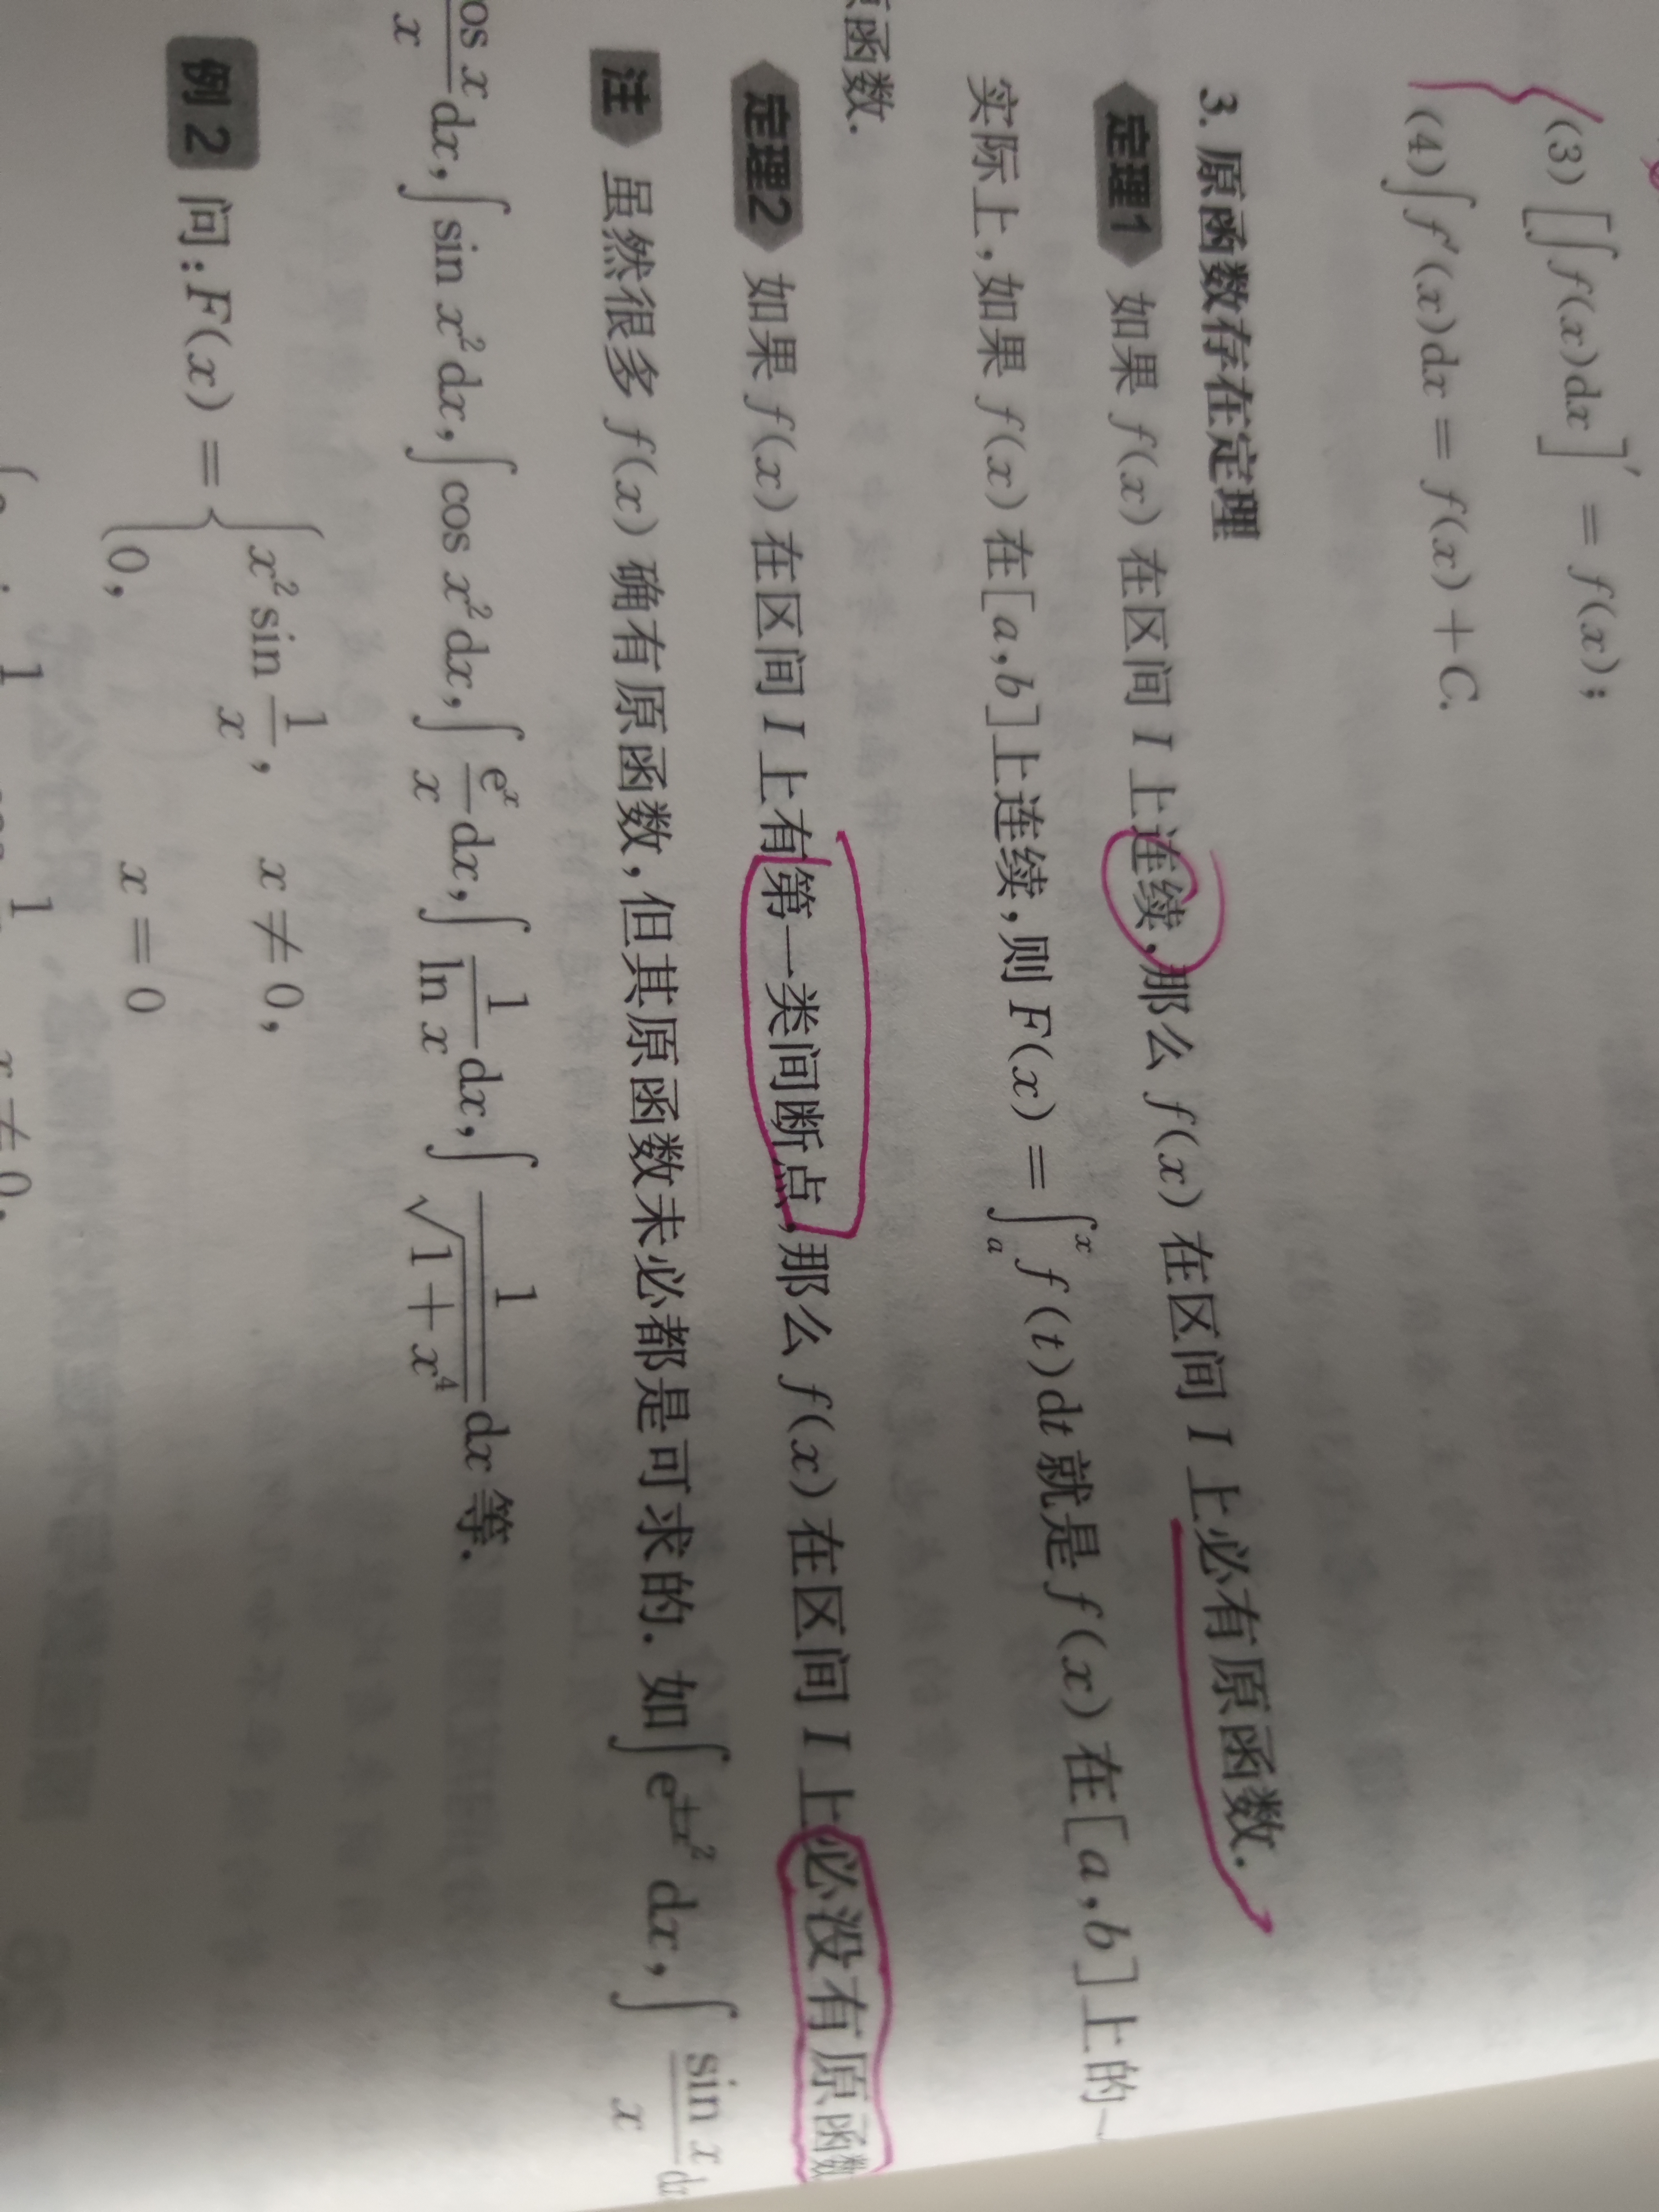 '></div><hr><h3>老师回复问题</h3>左右极限存在且相等且等于f